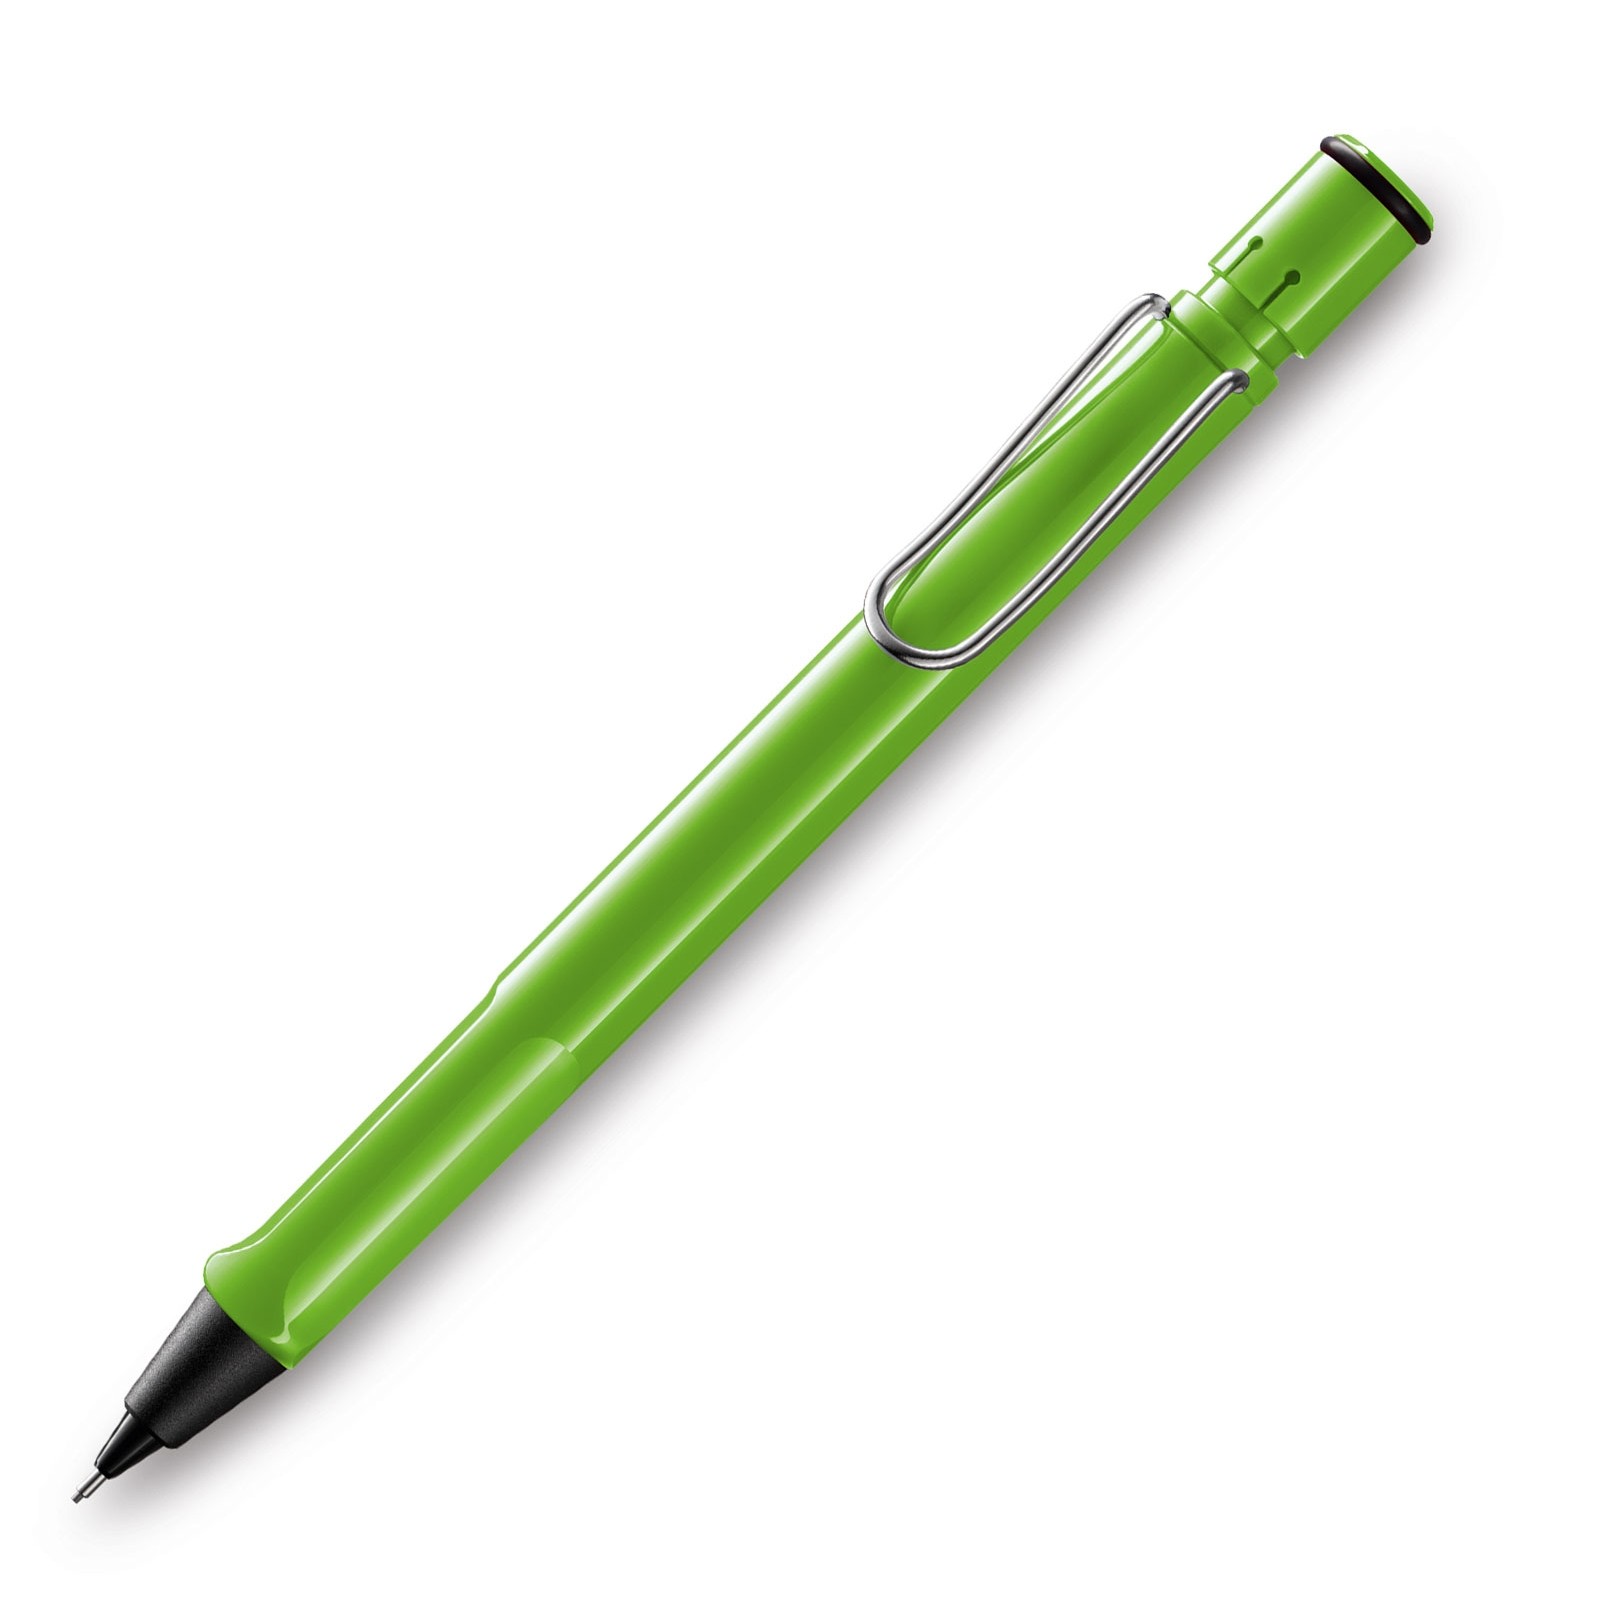 Lamy Safari Green Pencil | Penworld » More than 10.000 pens in stock ...